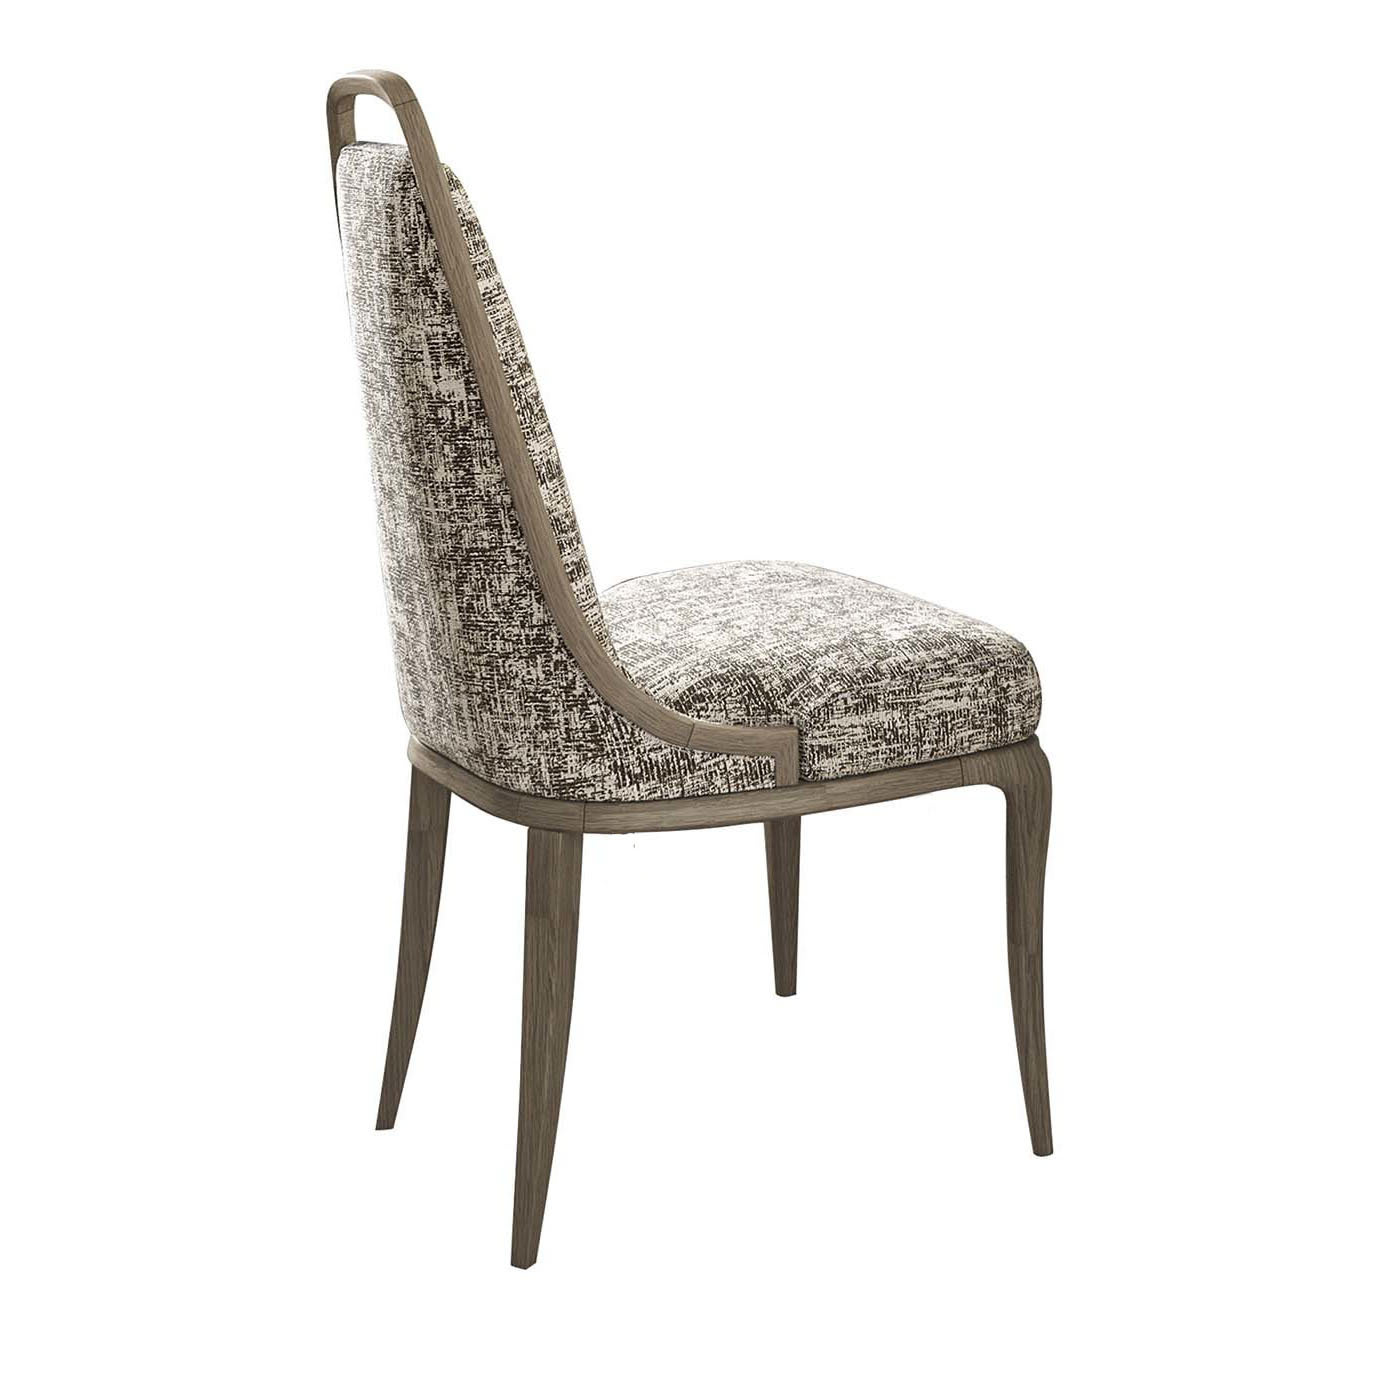 Beige Upholstered Chair - A.R. Arredamenti